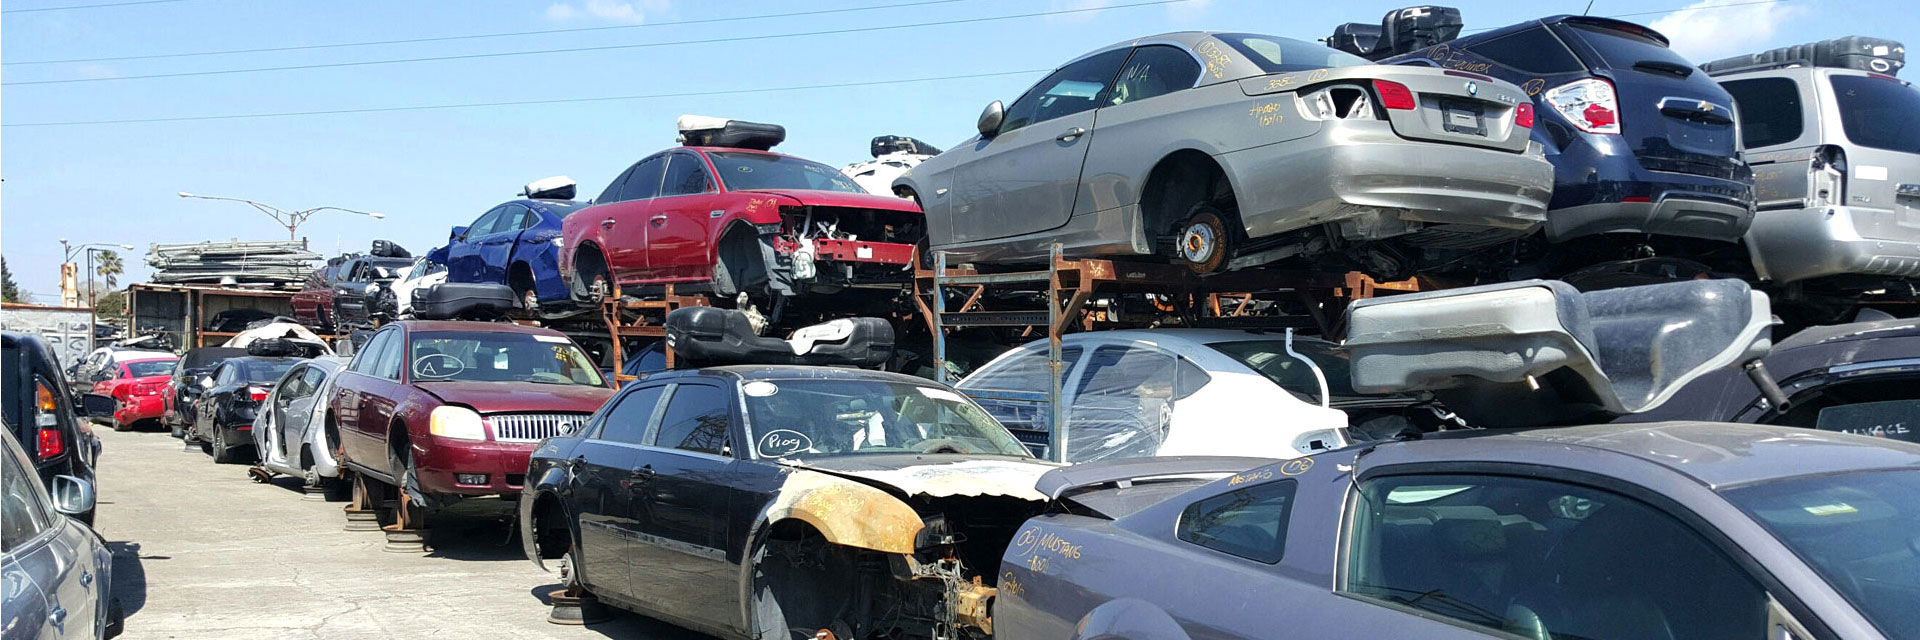 Junkyard for Dorris Auto Wreckers of Hayward, CA